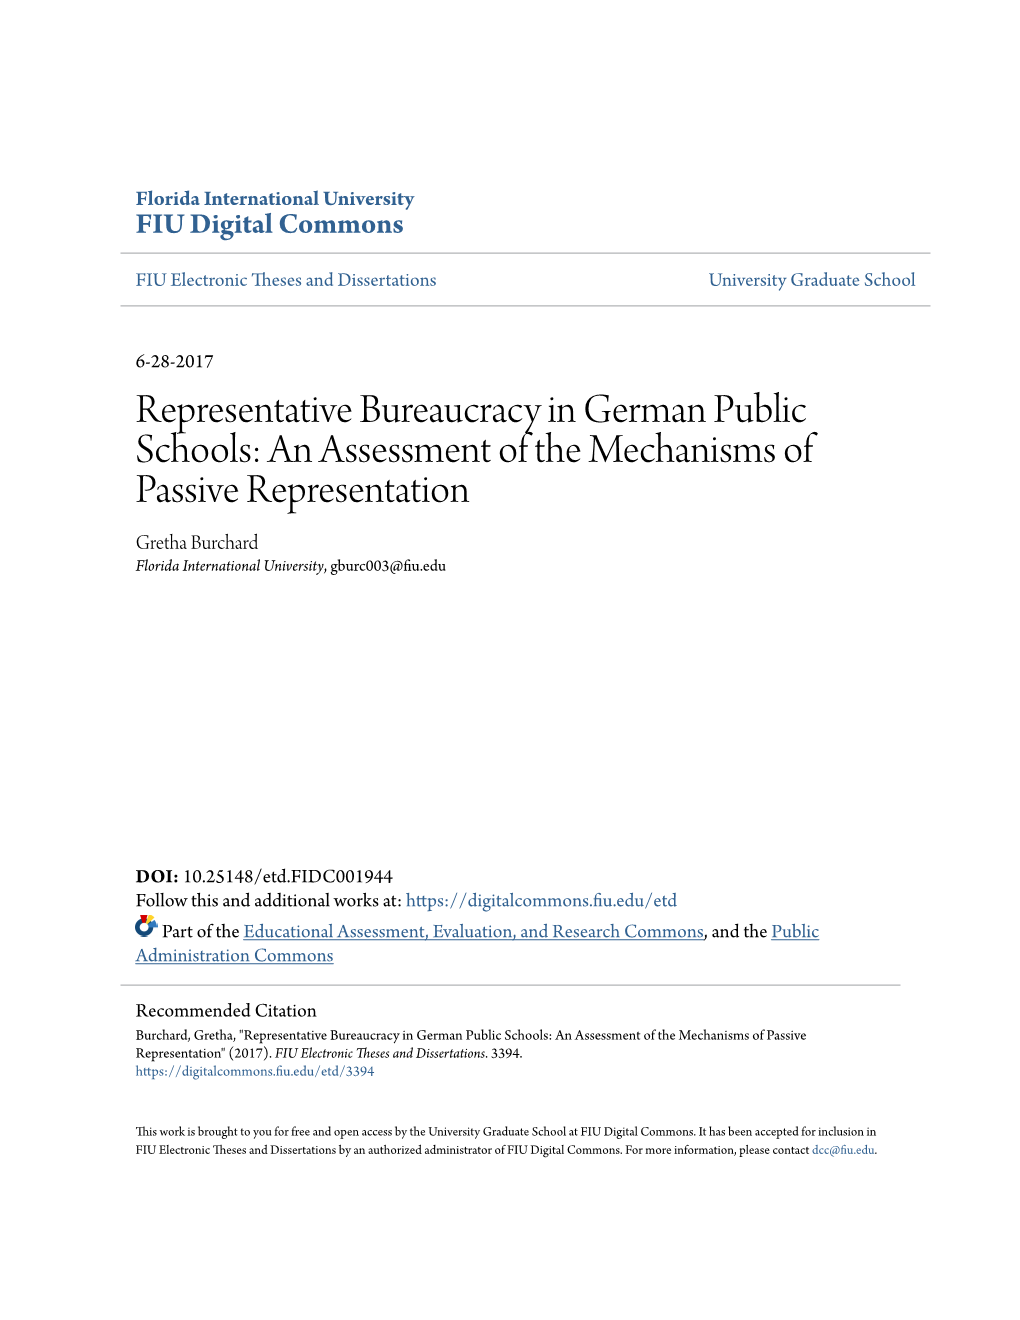 Representative Bureaucracy in German Public Schools